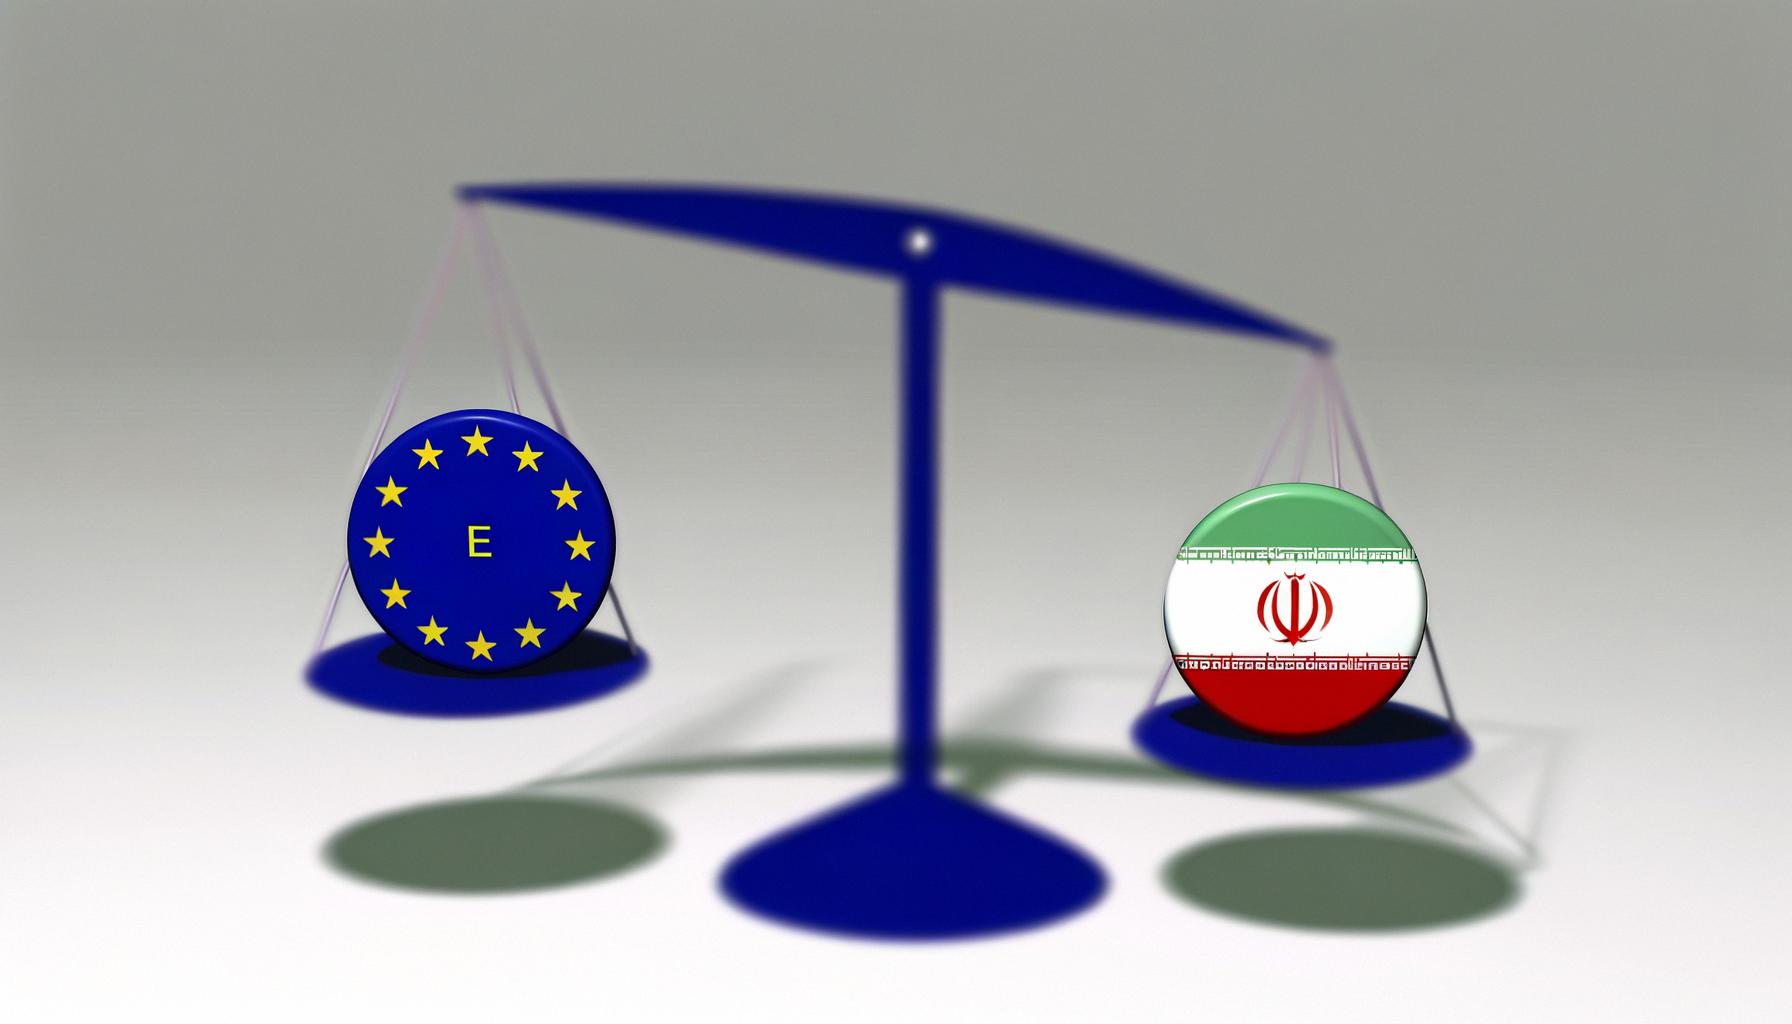 US, EU escalate sanctions on Iran's military, stressing diplomacy.